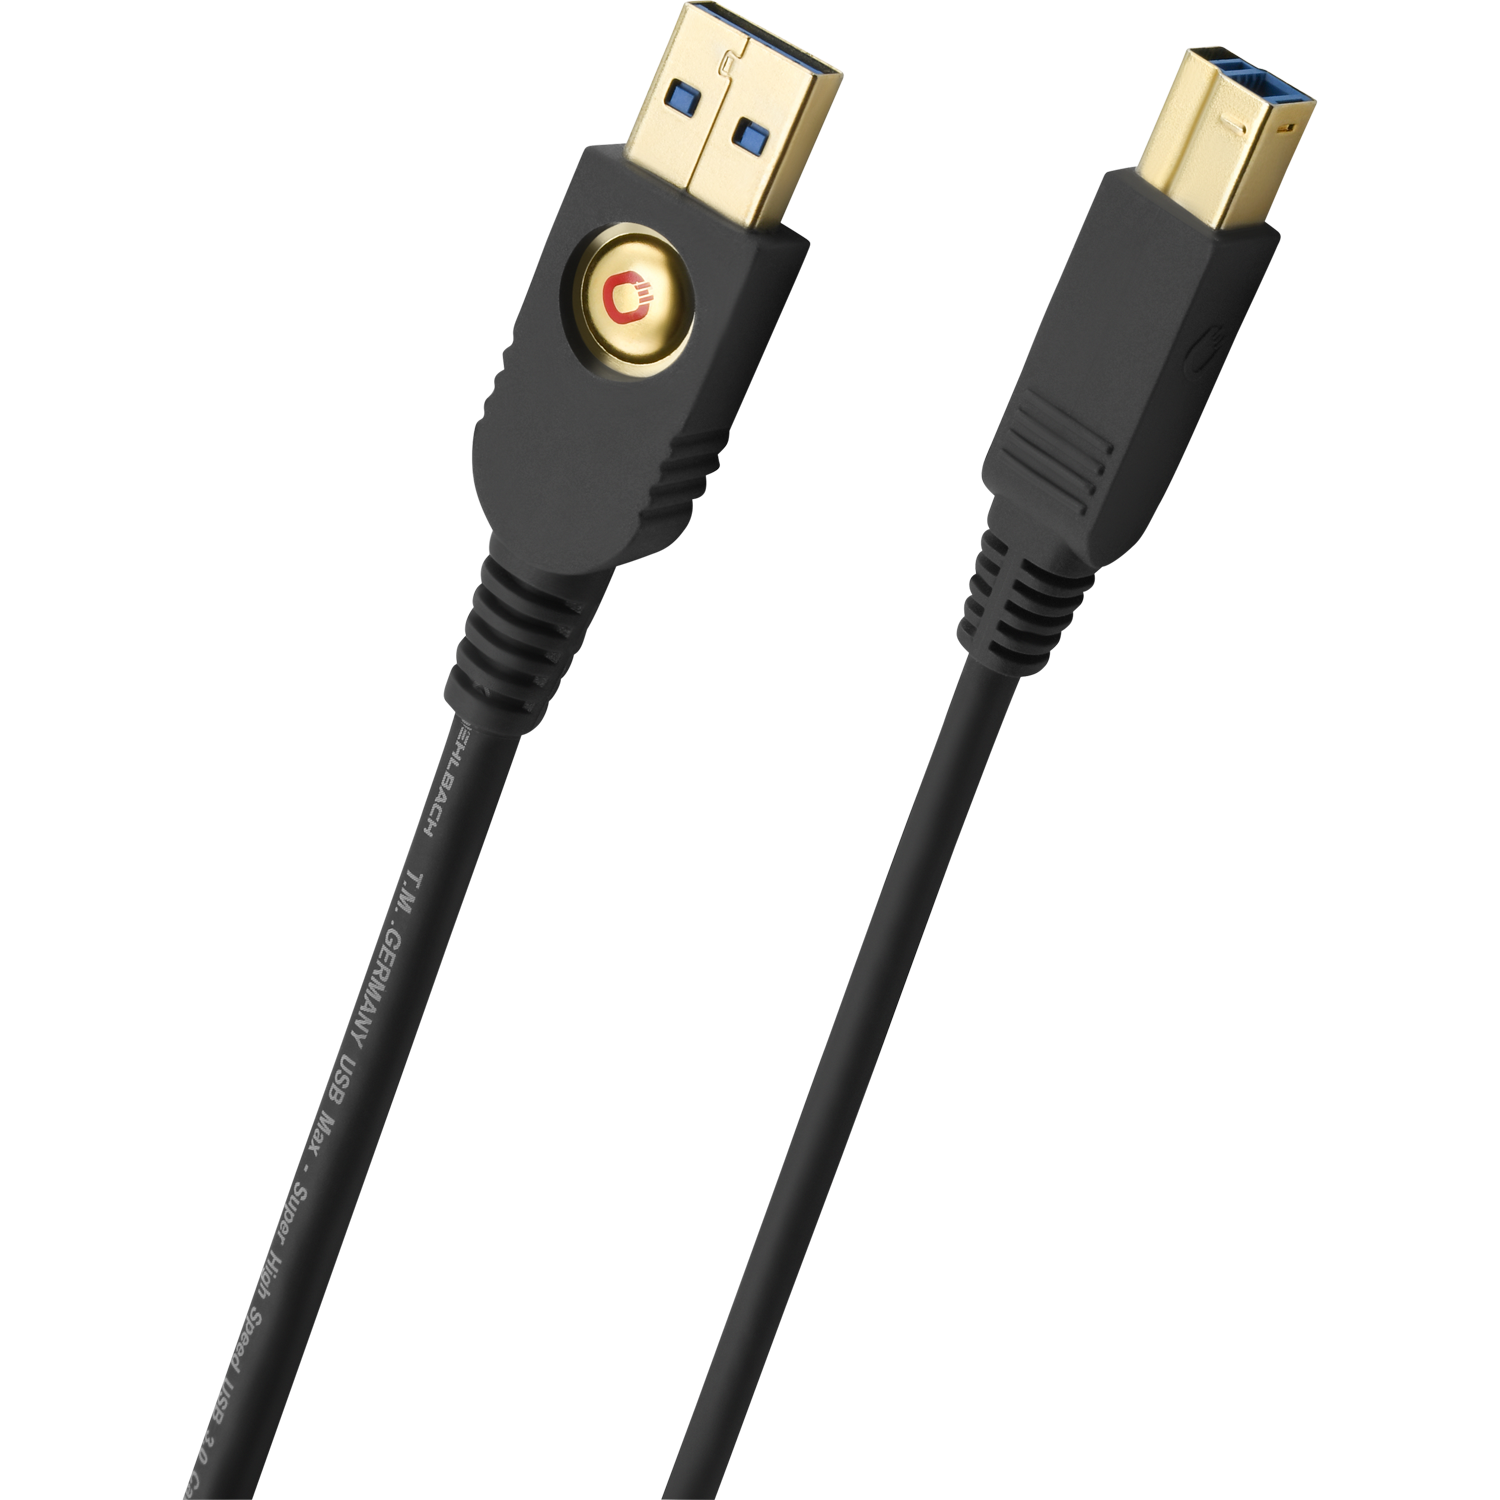 A/B A 3.2 Max USB-Kabel B 1 Gen OEHLBACH Kabel Typ auf Typ